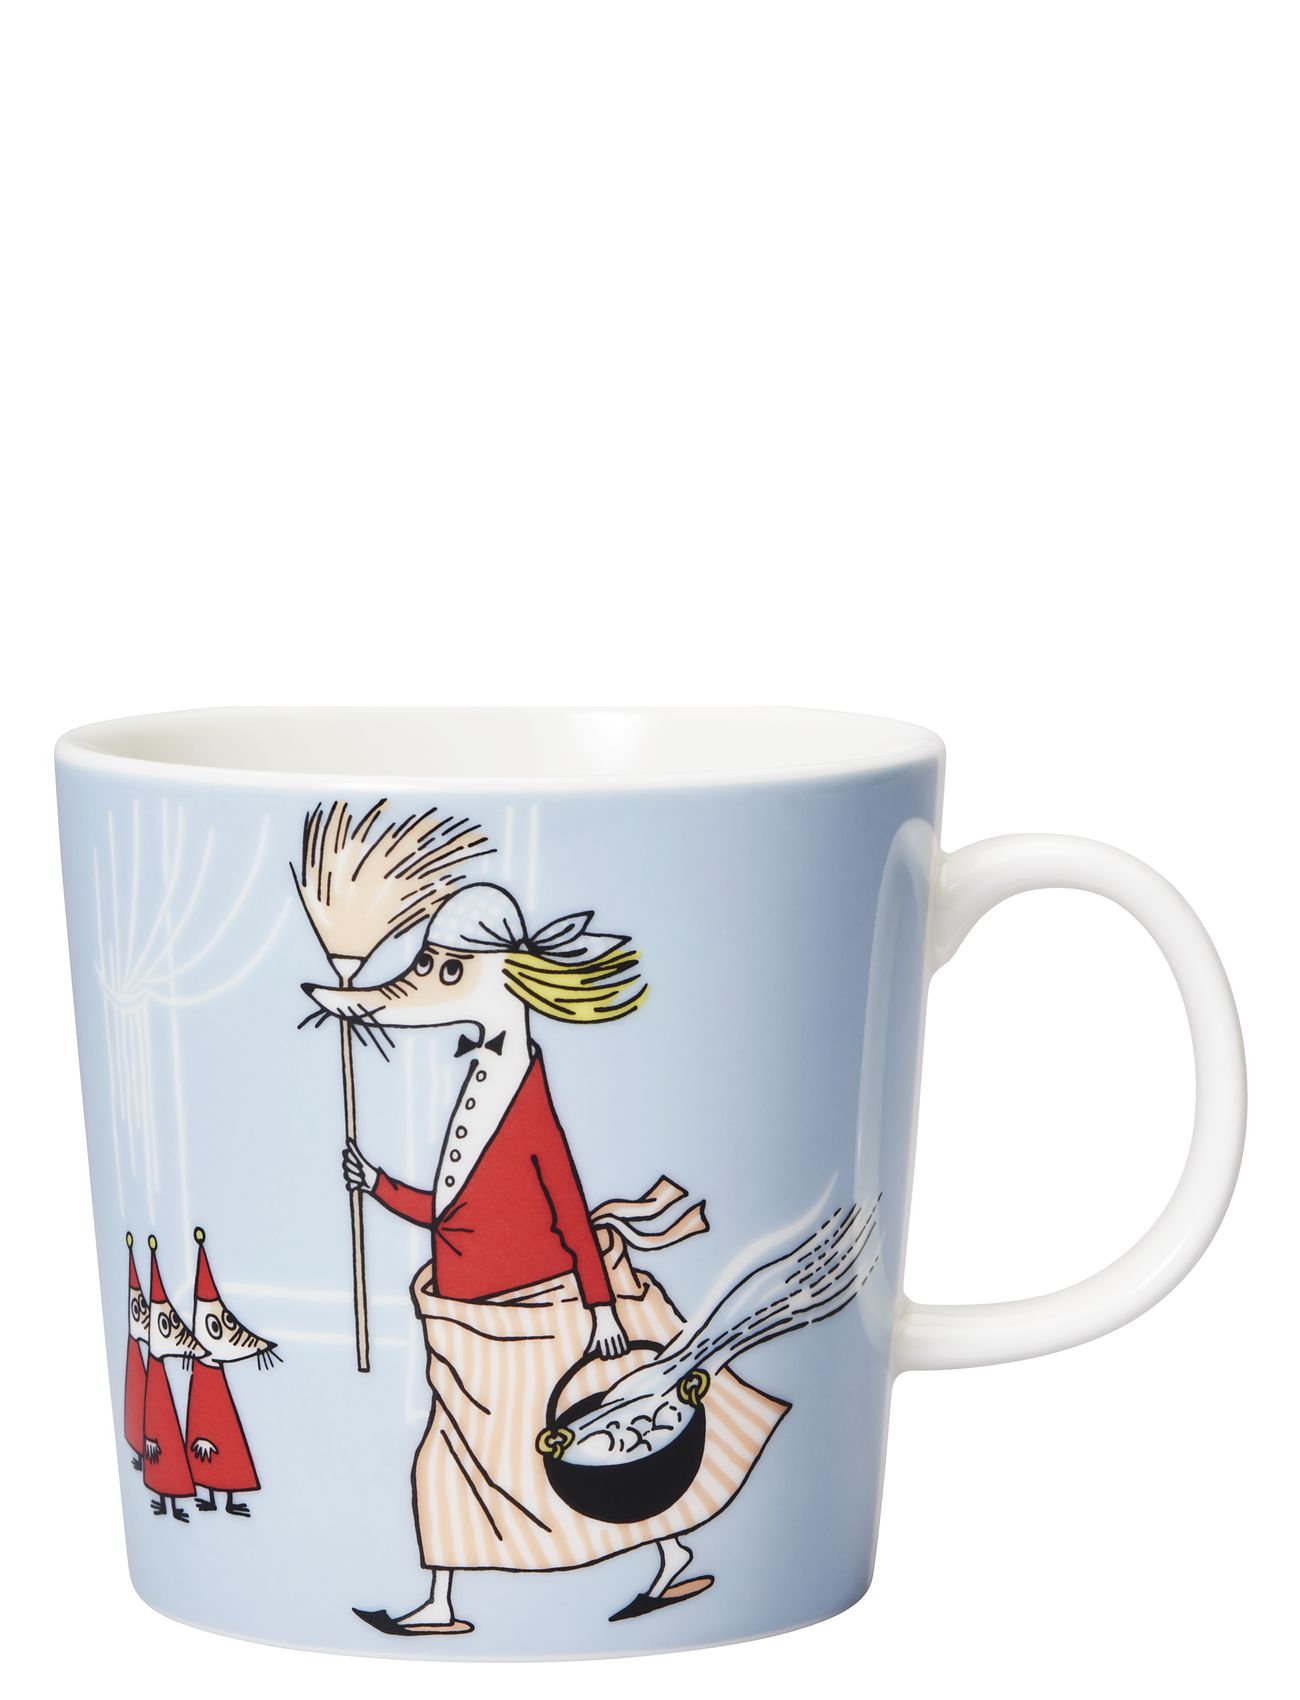 Moomin Mug 0,3L Fillyjonk Home Tableware Cups & Mugs Coffee Cups Blue Arabia